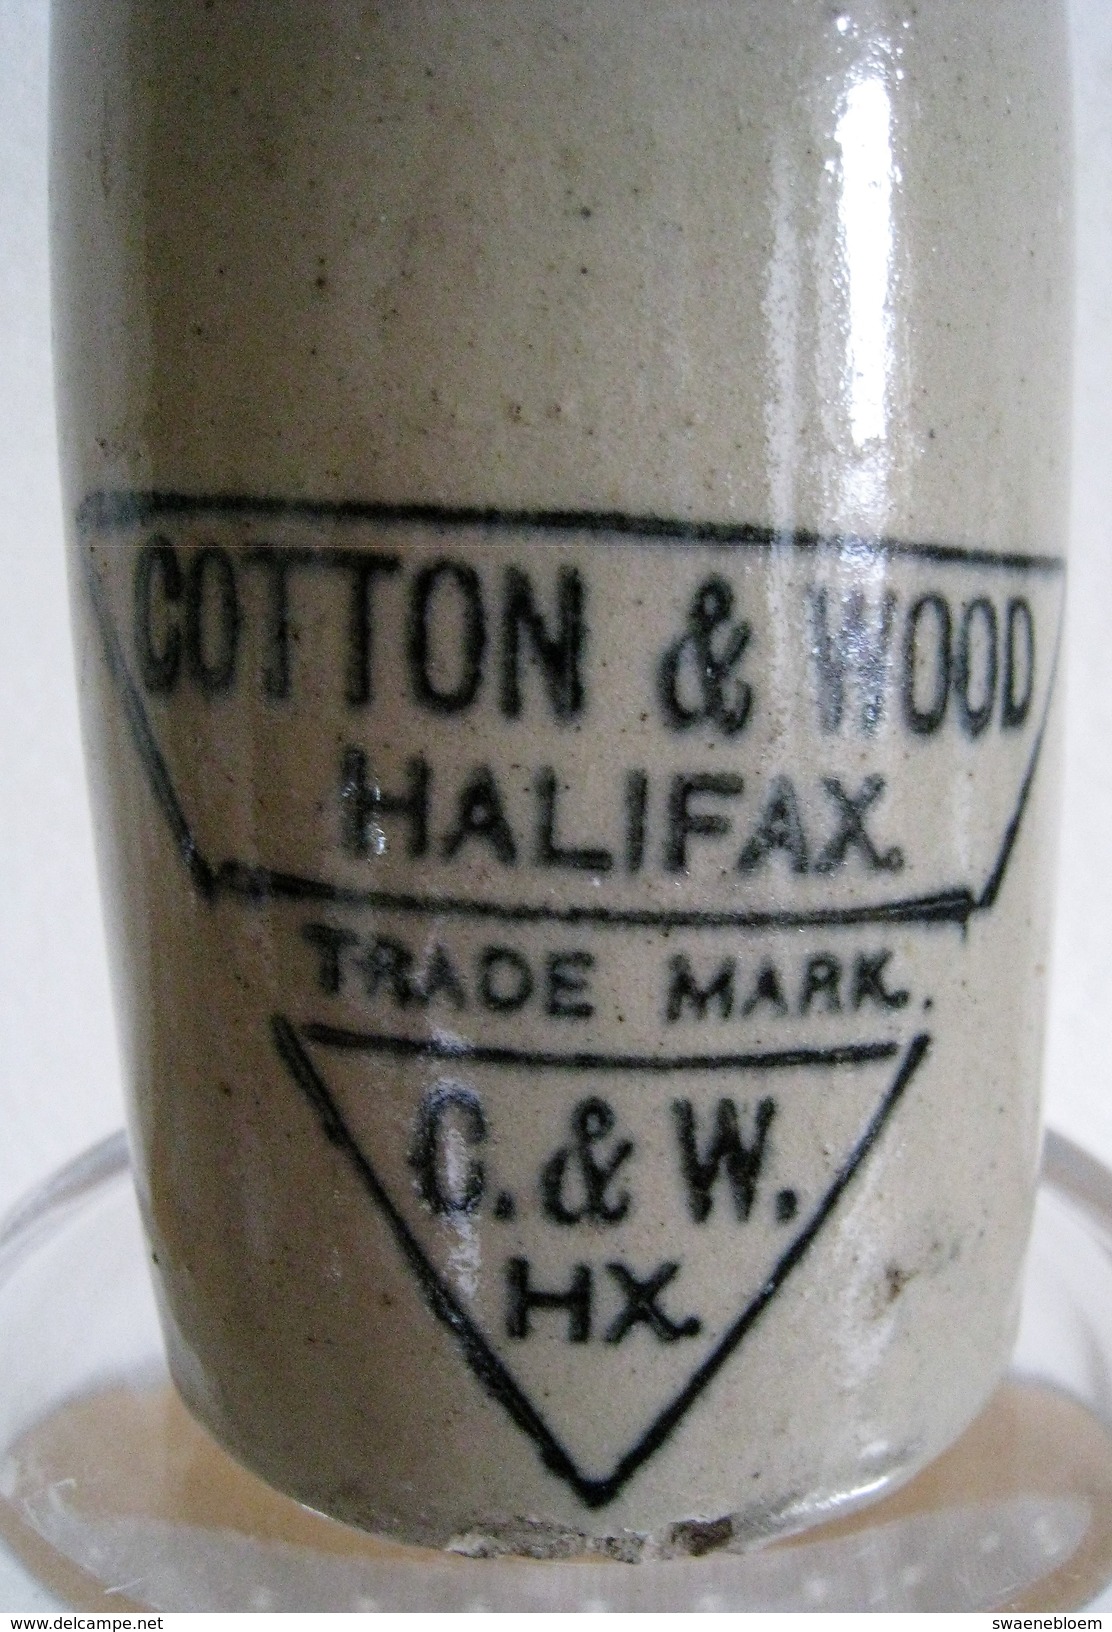 GB.- COTTON & WOOD. HALIFAX. TRADE MARK. C. & W. HX. 4 Scans. - Zonder Classificatie